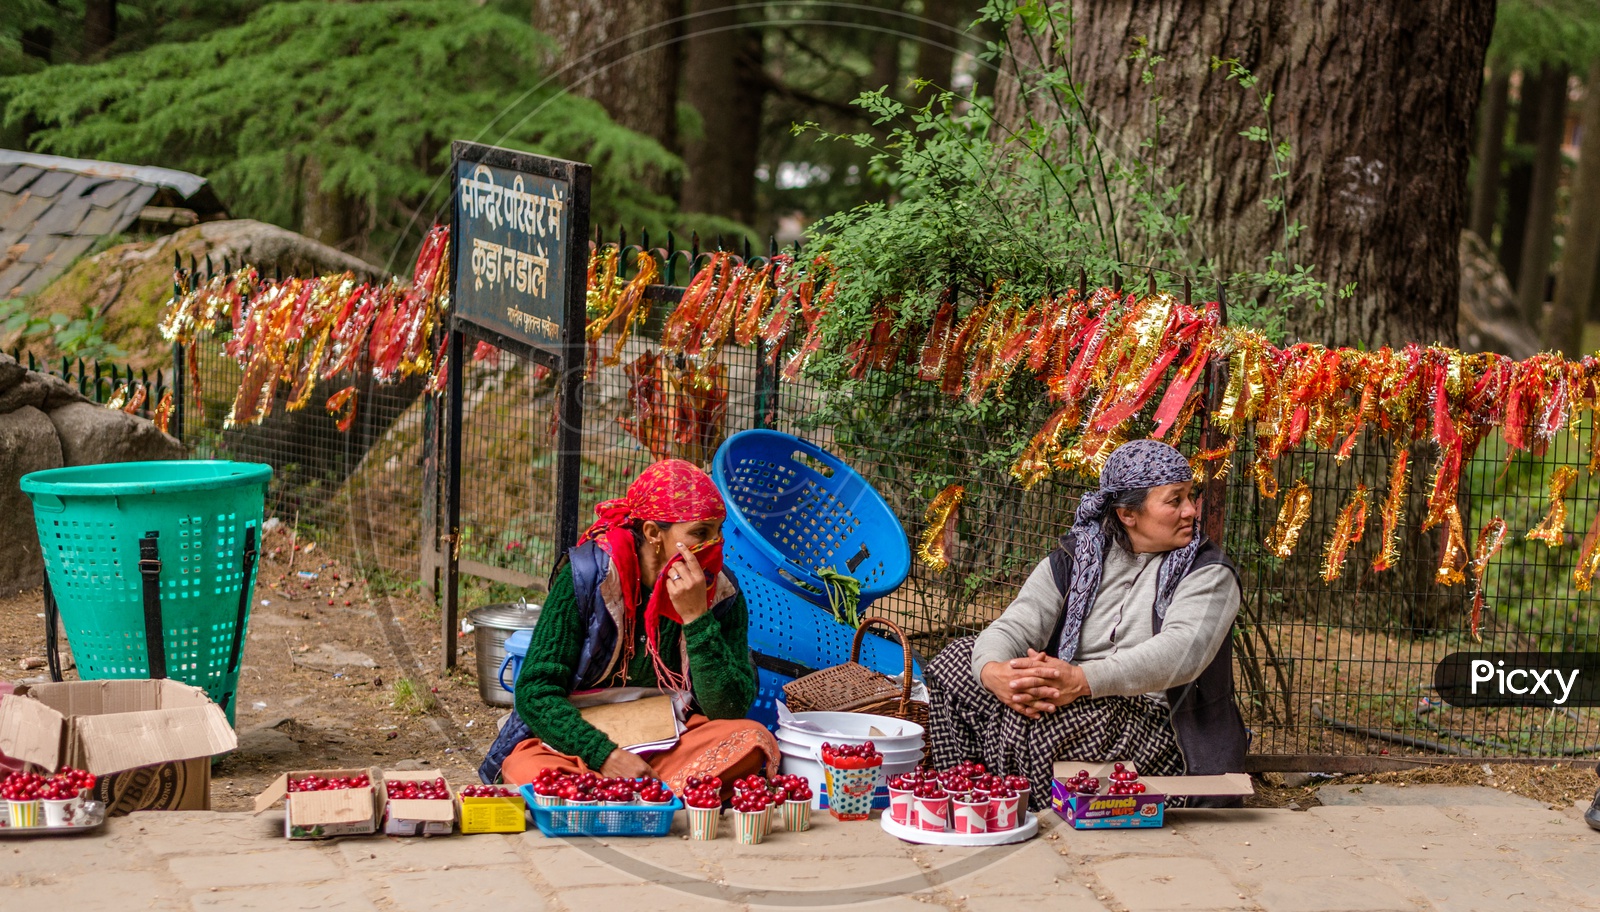 Local Women selling fruits at Hidimda Devi Temple in Manali